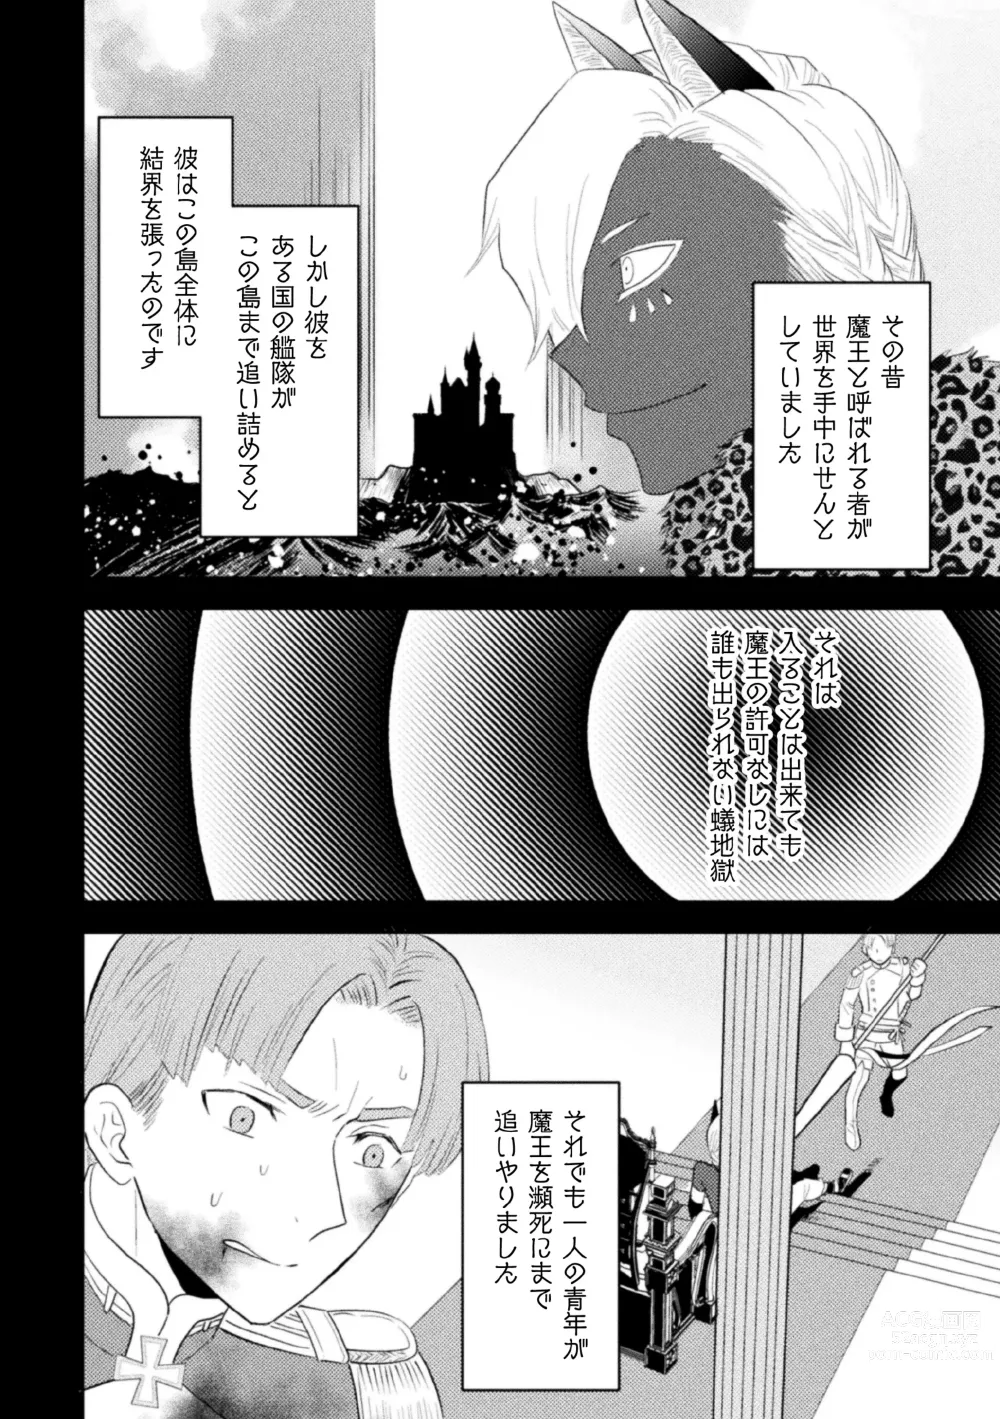 Page 10 of manga Zekkai Rougoku Kan Eien no Rougoku Kouhen